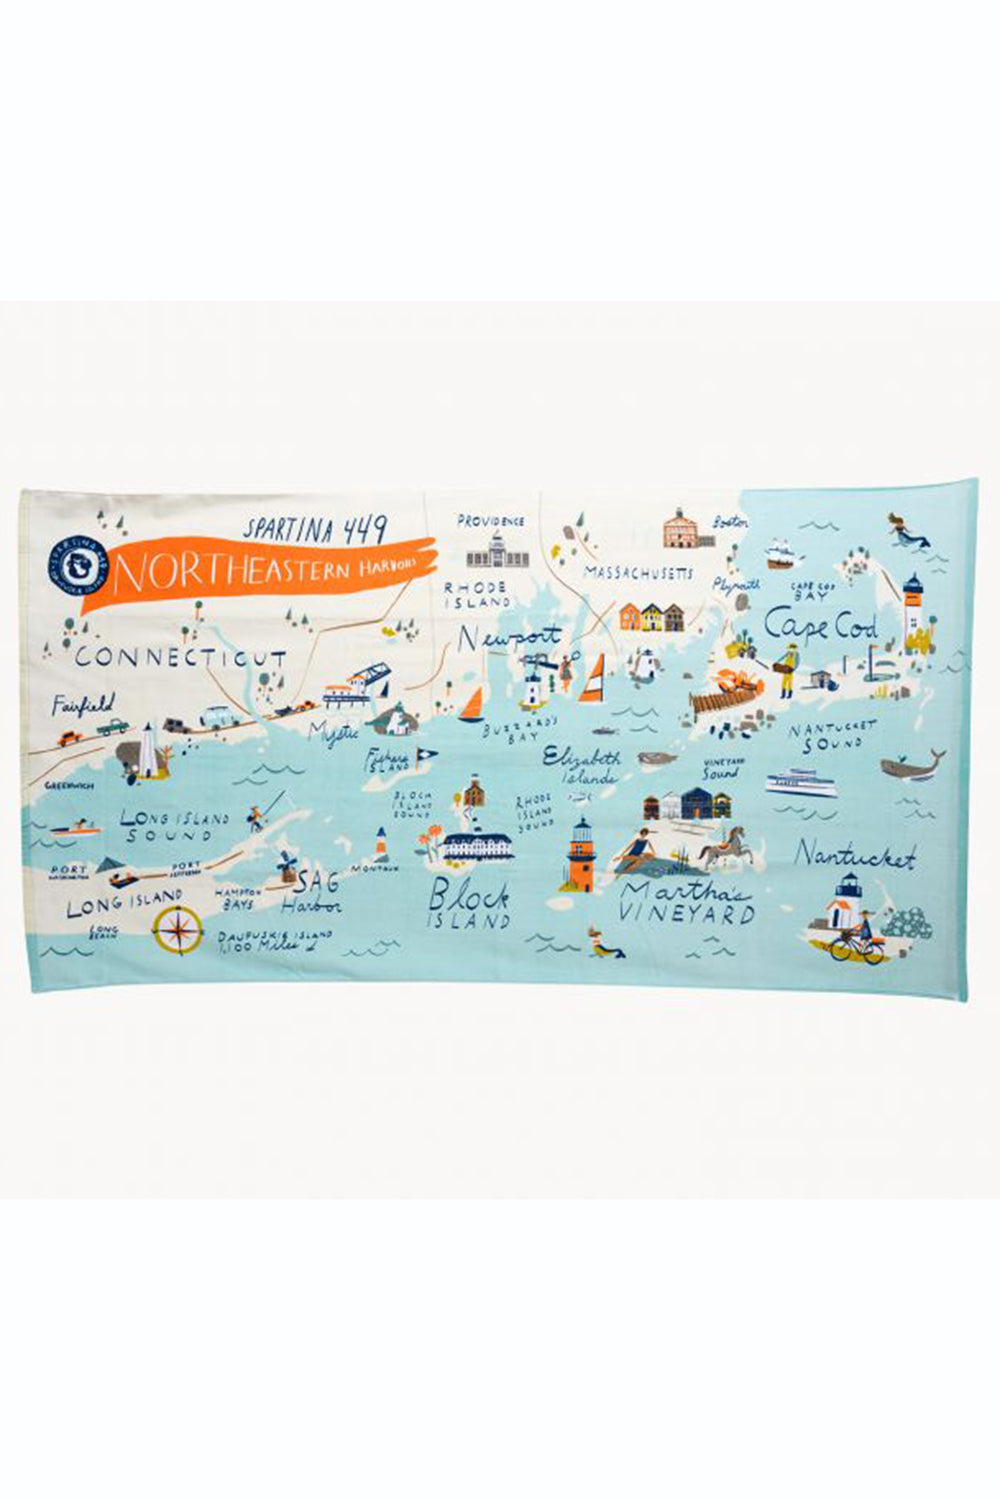 SIDEWALK SALE ITEM - Destination Map Beach Towel - Northeastern Harbors